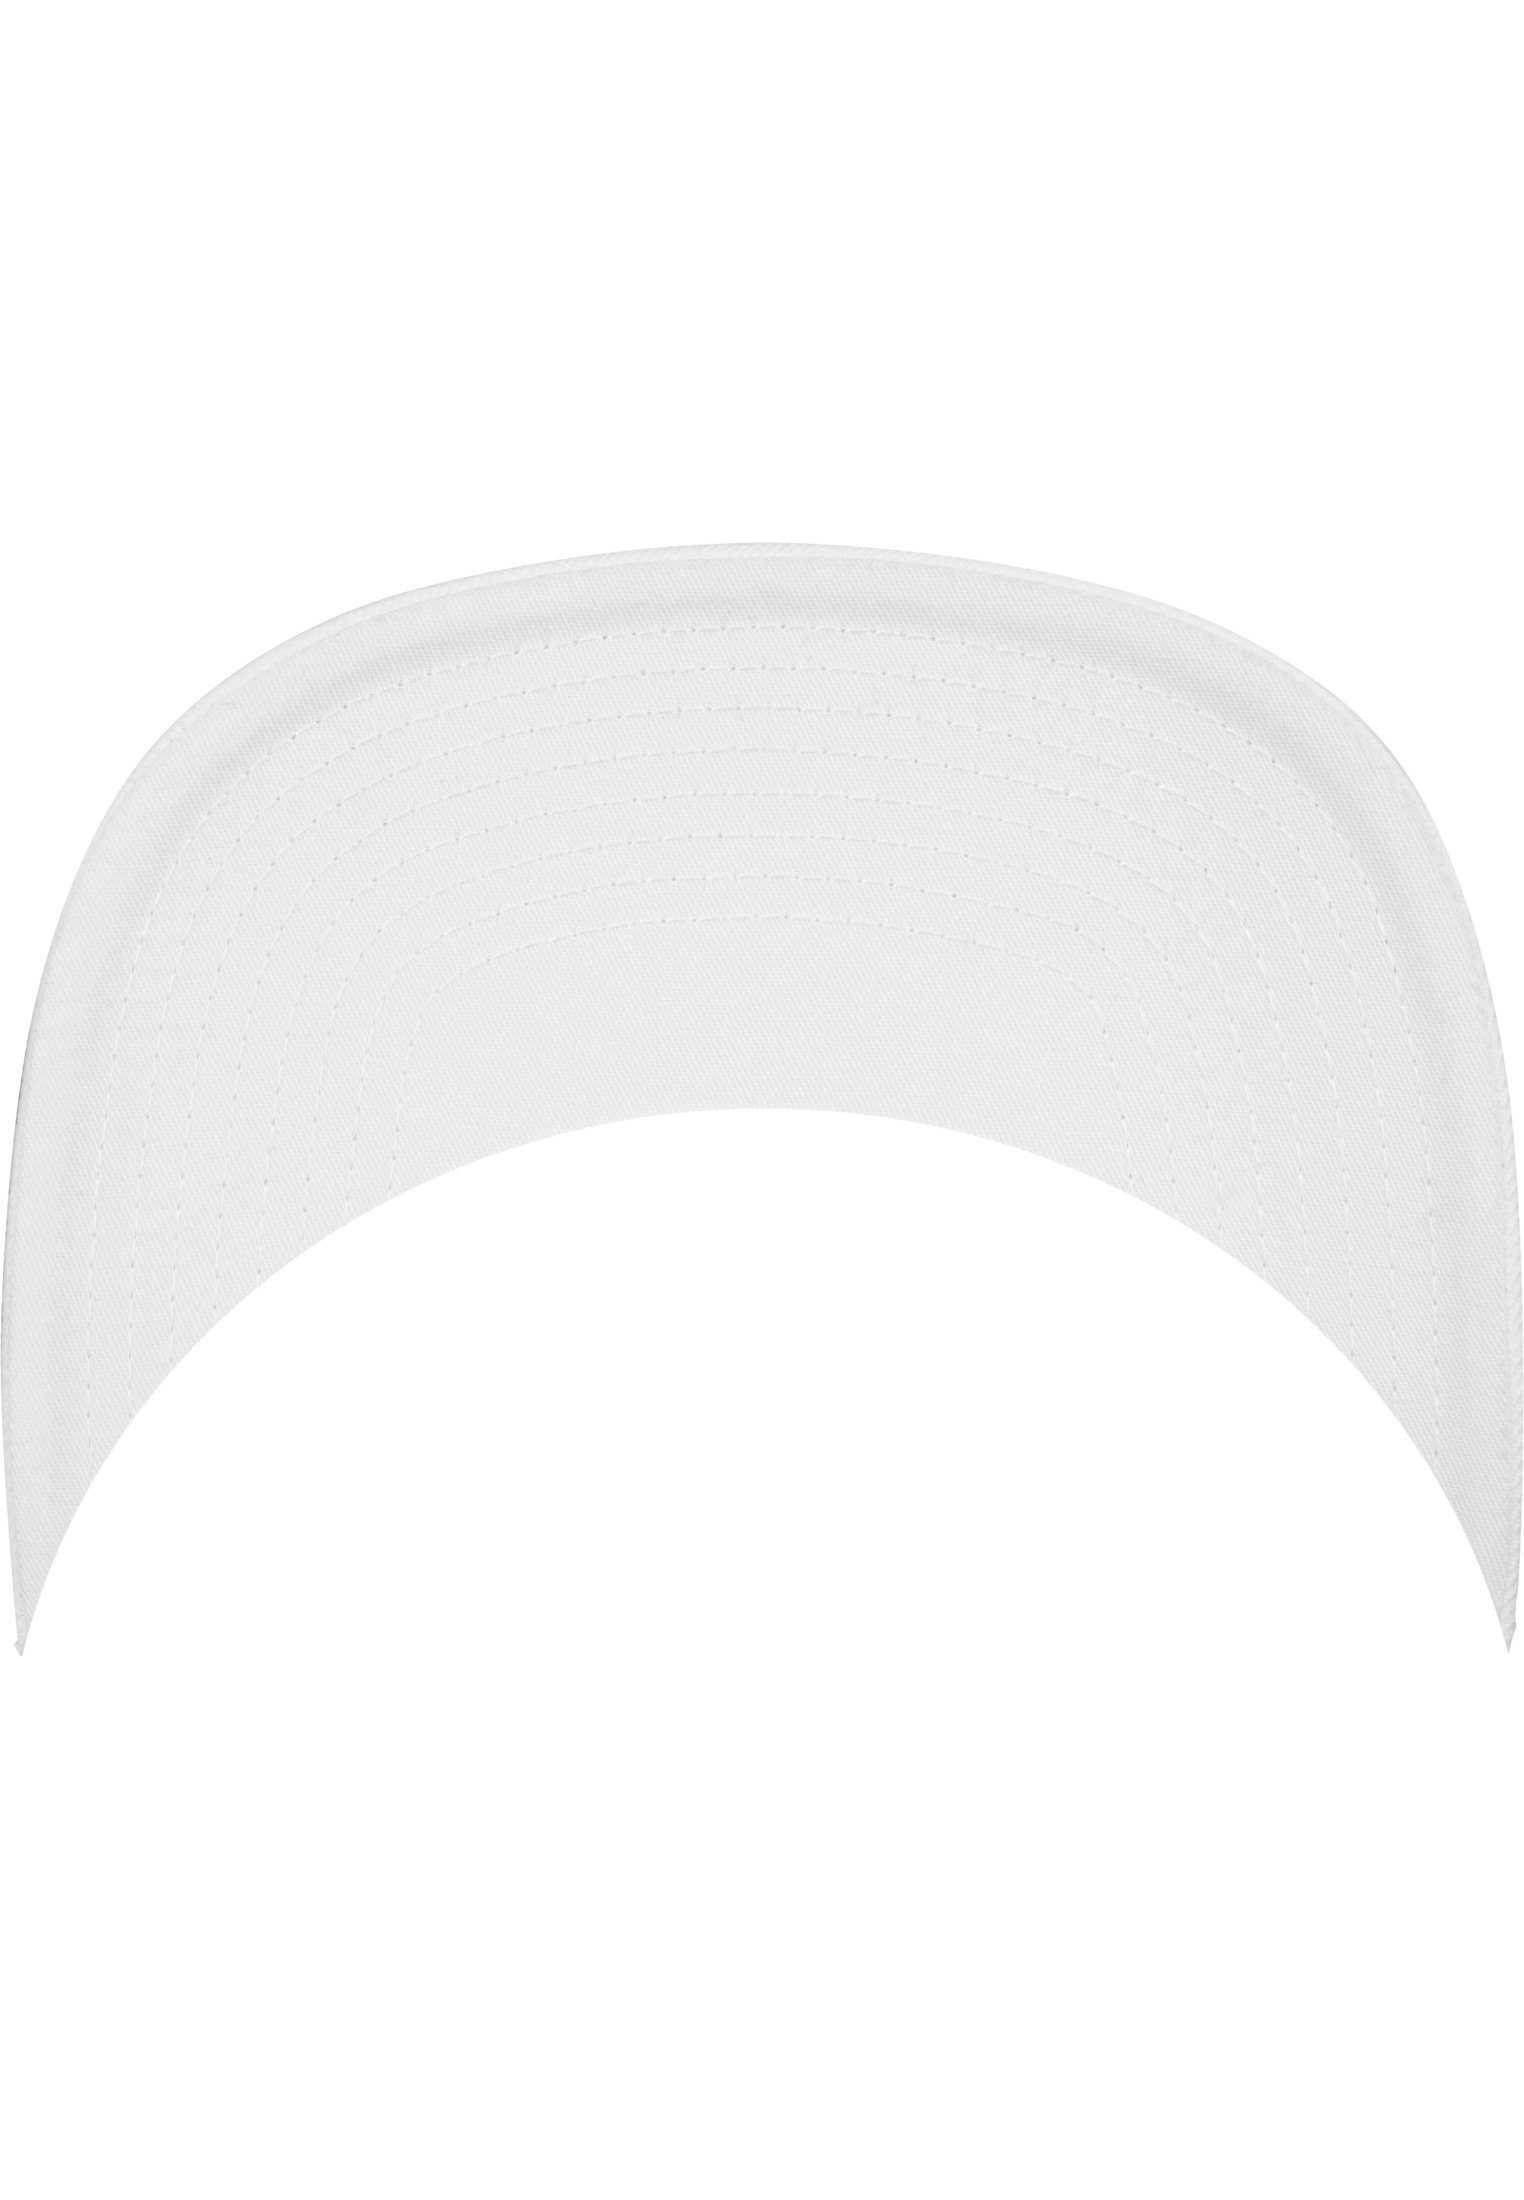 Flexfit Snapback Snapback white/white Bandana Tie Flex Cap